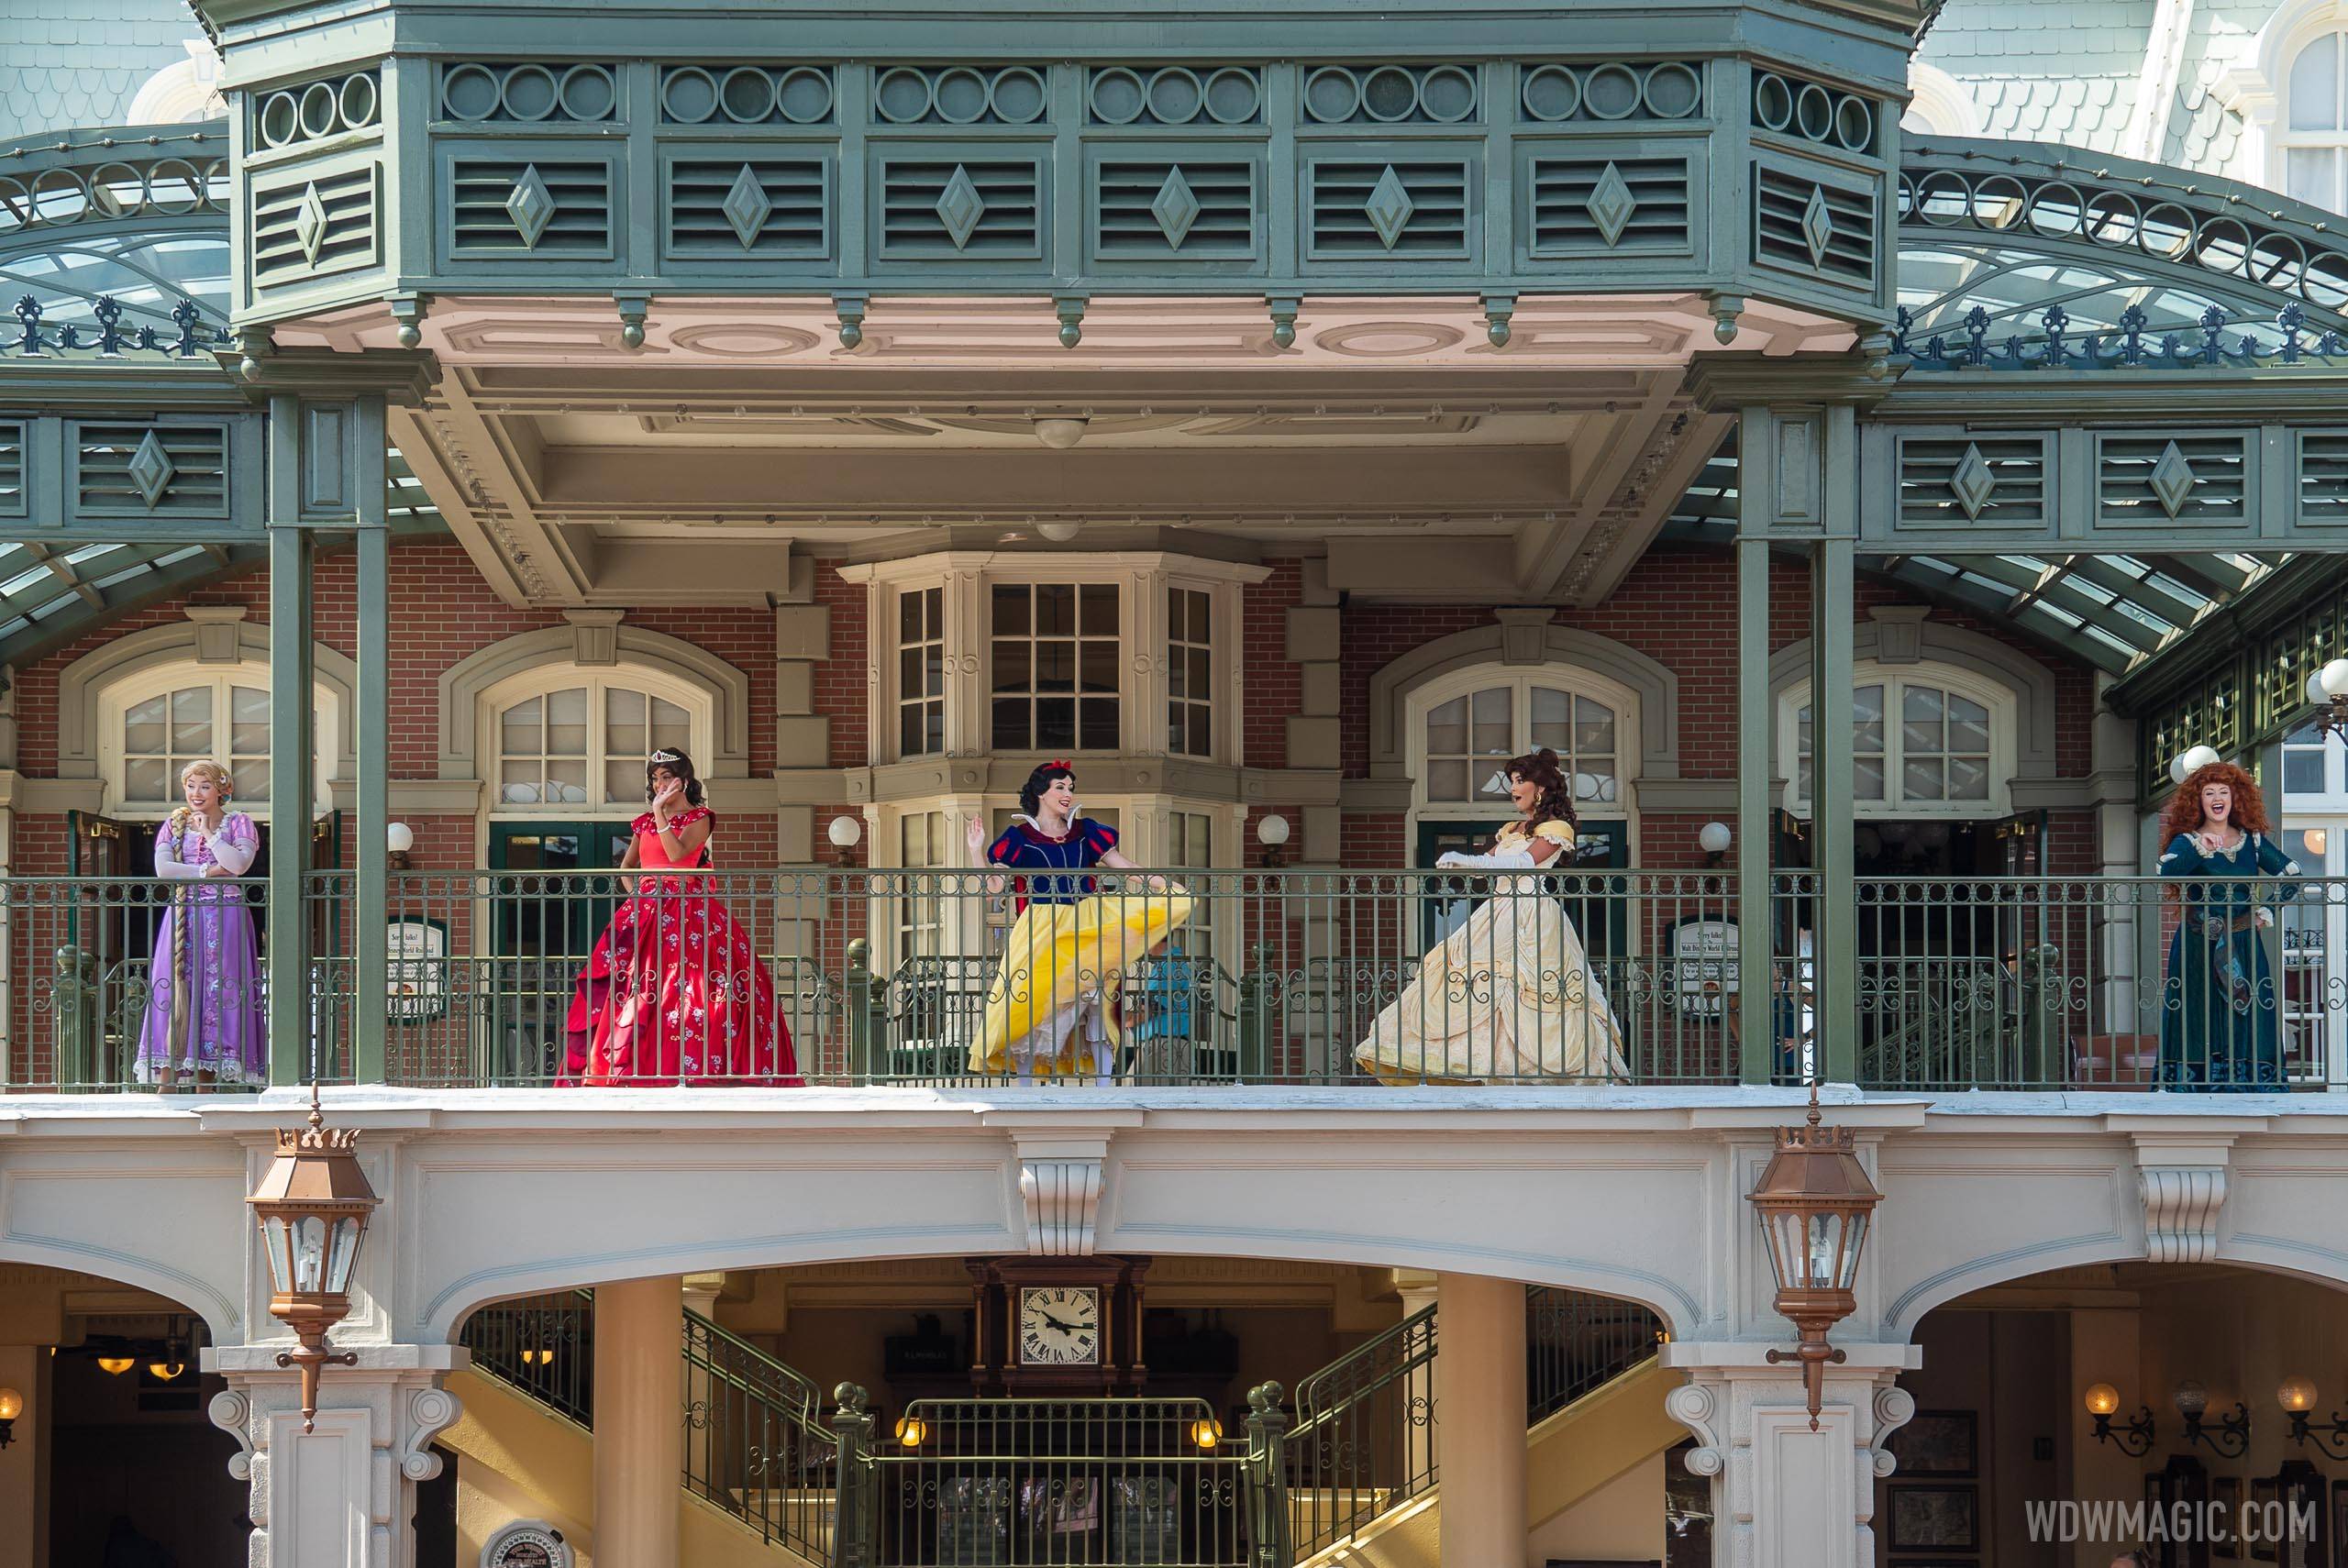 Disney Princesses on the train station balcony